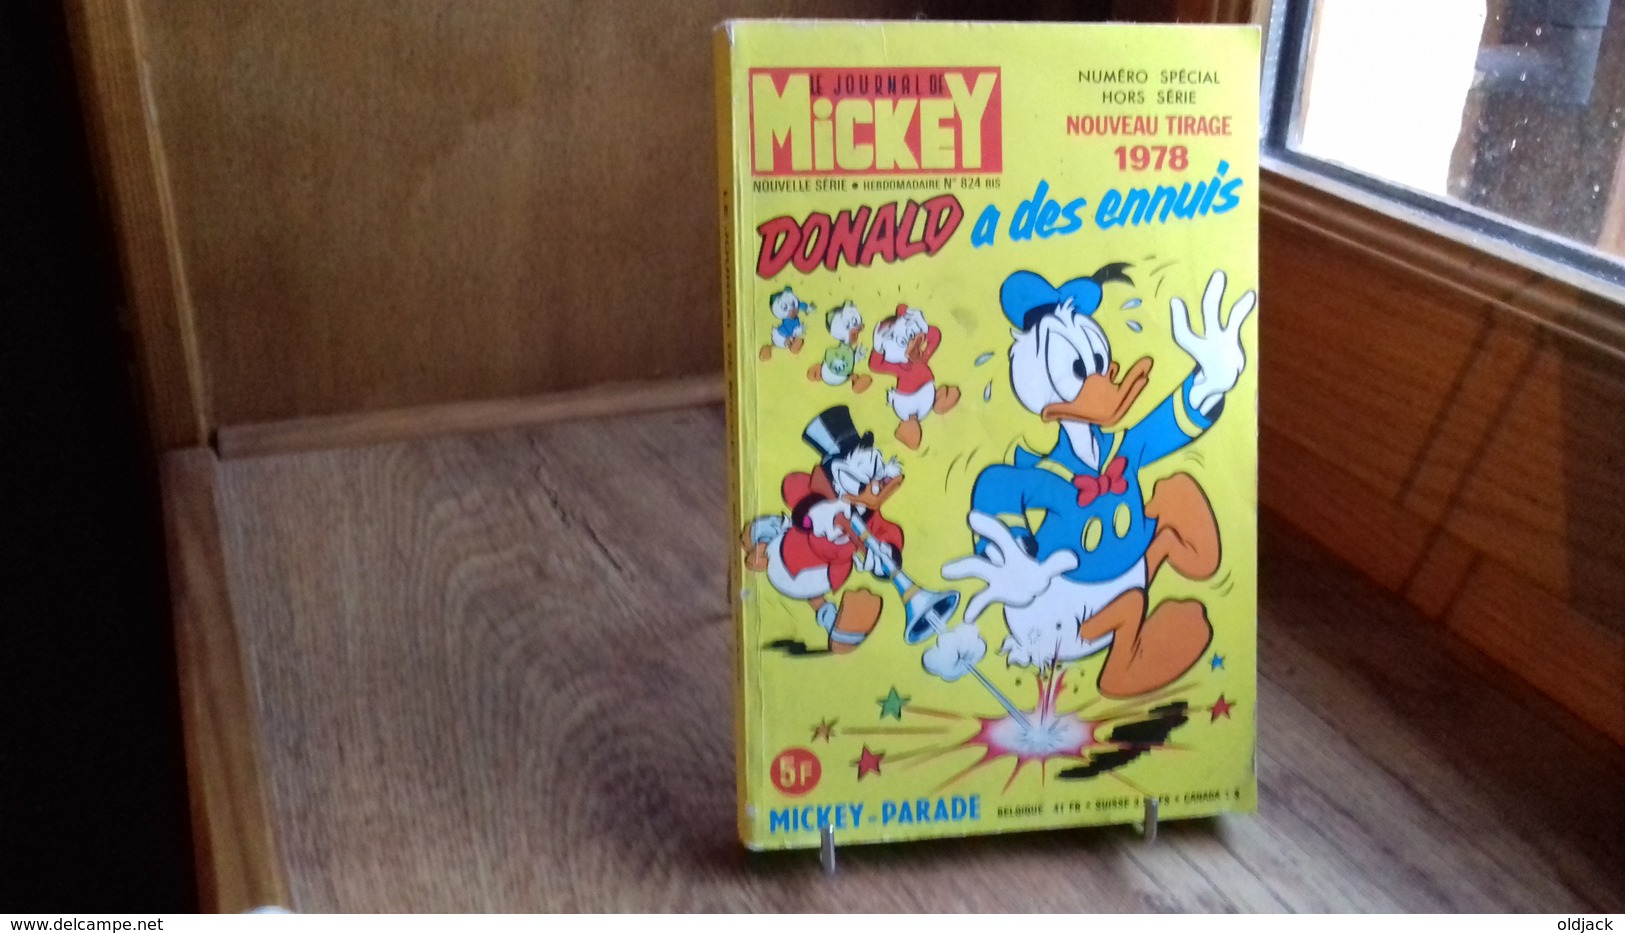 MICKEY PARADE (nvelle Série)Donald A Des Ennuis.N°824 Bis H-SERIE.1968(262R10) - Mickey Parade